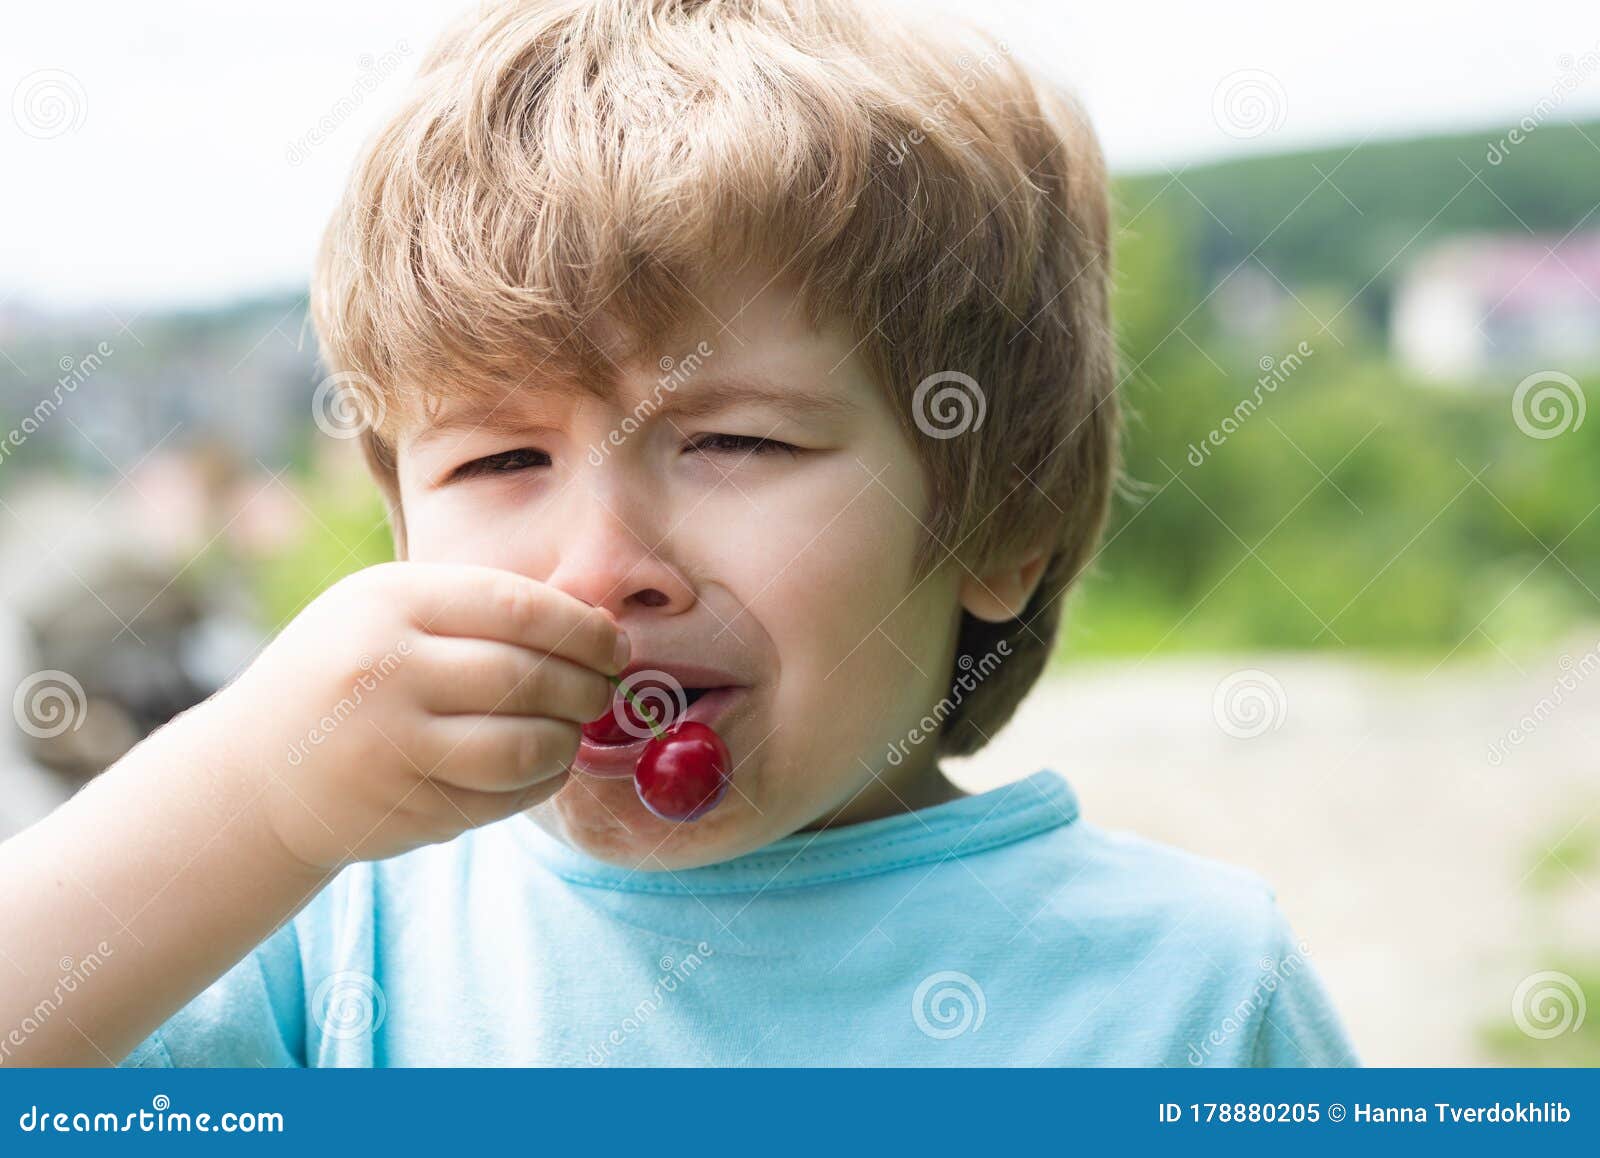 The Child Eats Sour Cherries. Sour Taste. Fruit from the Home Garden ...